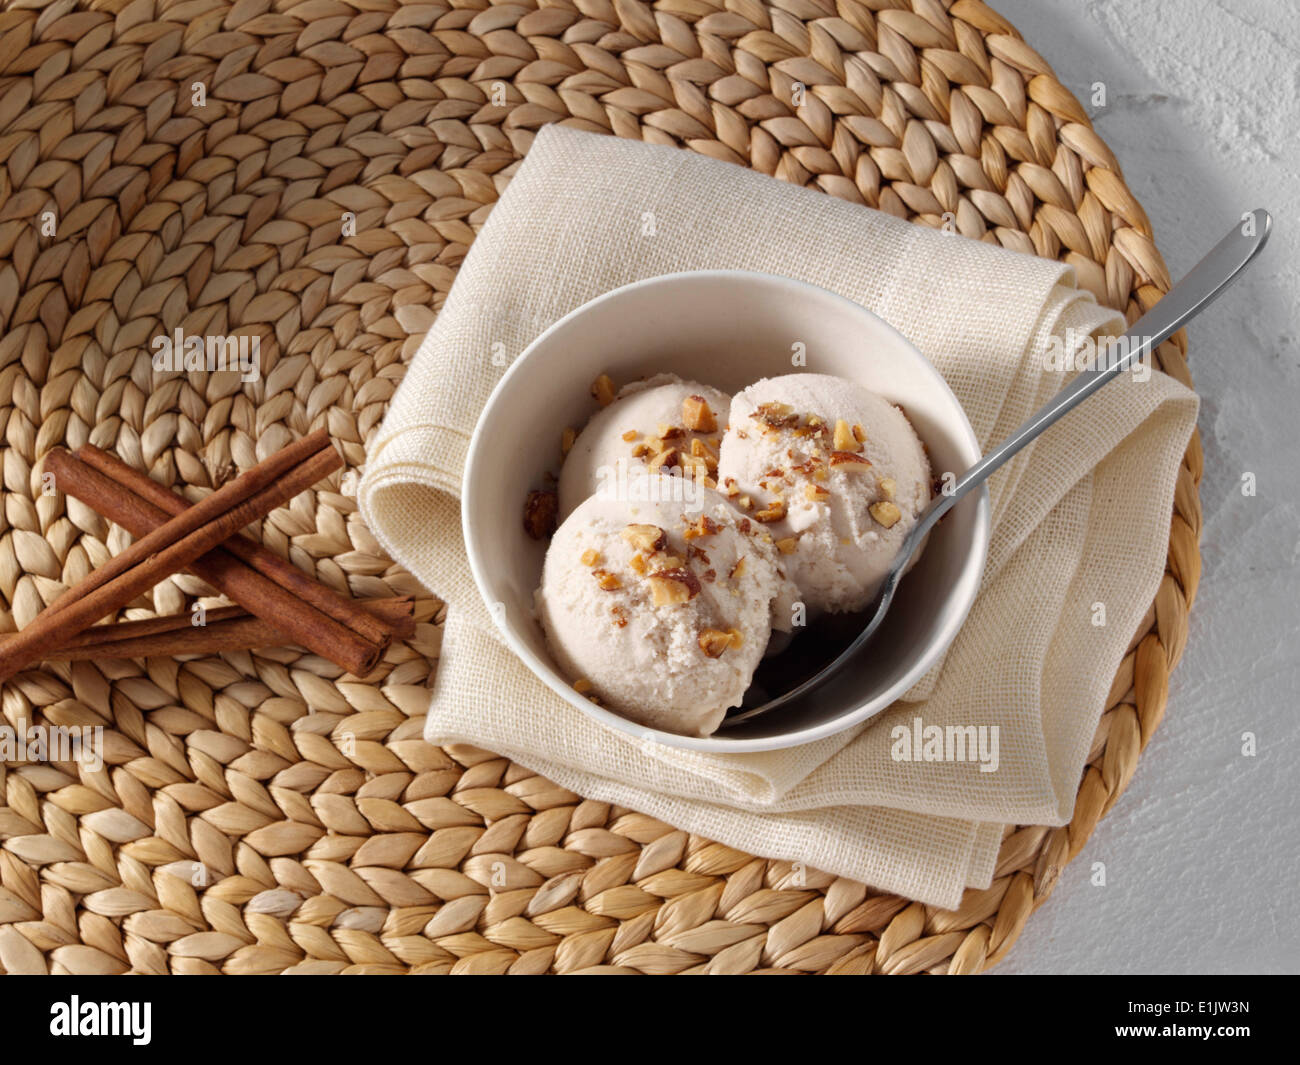 Canela almendra helado de coco Foto de stock